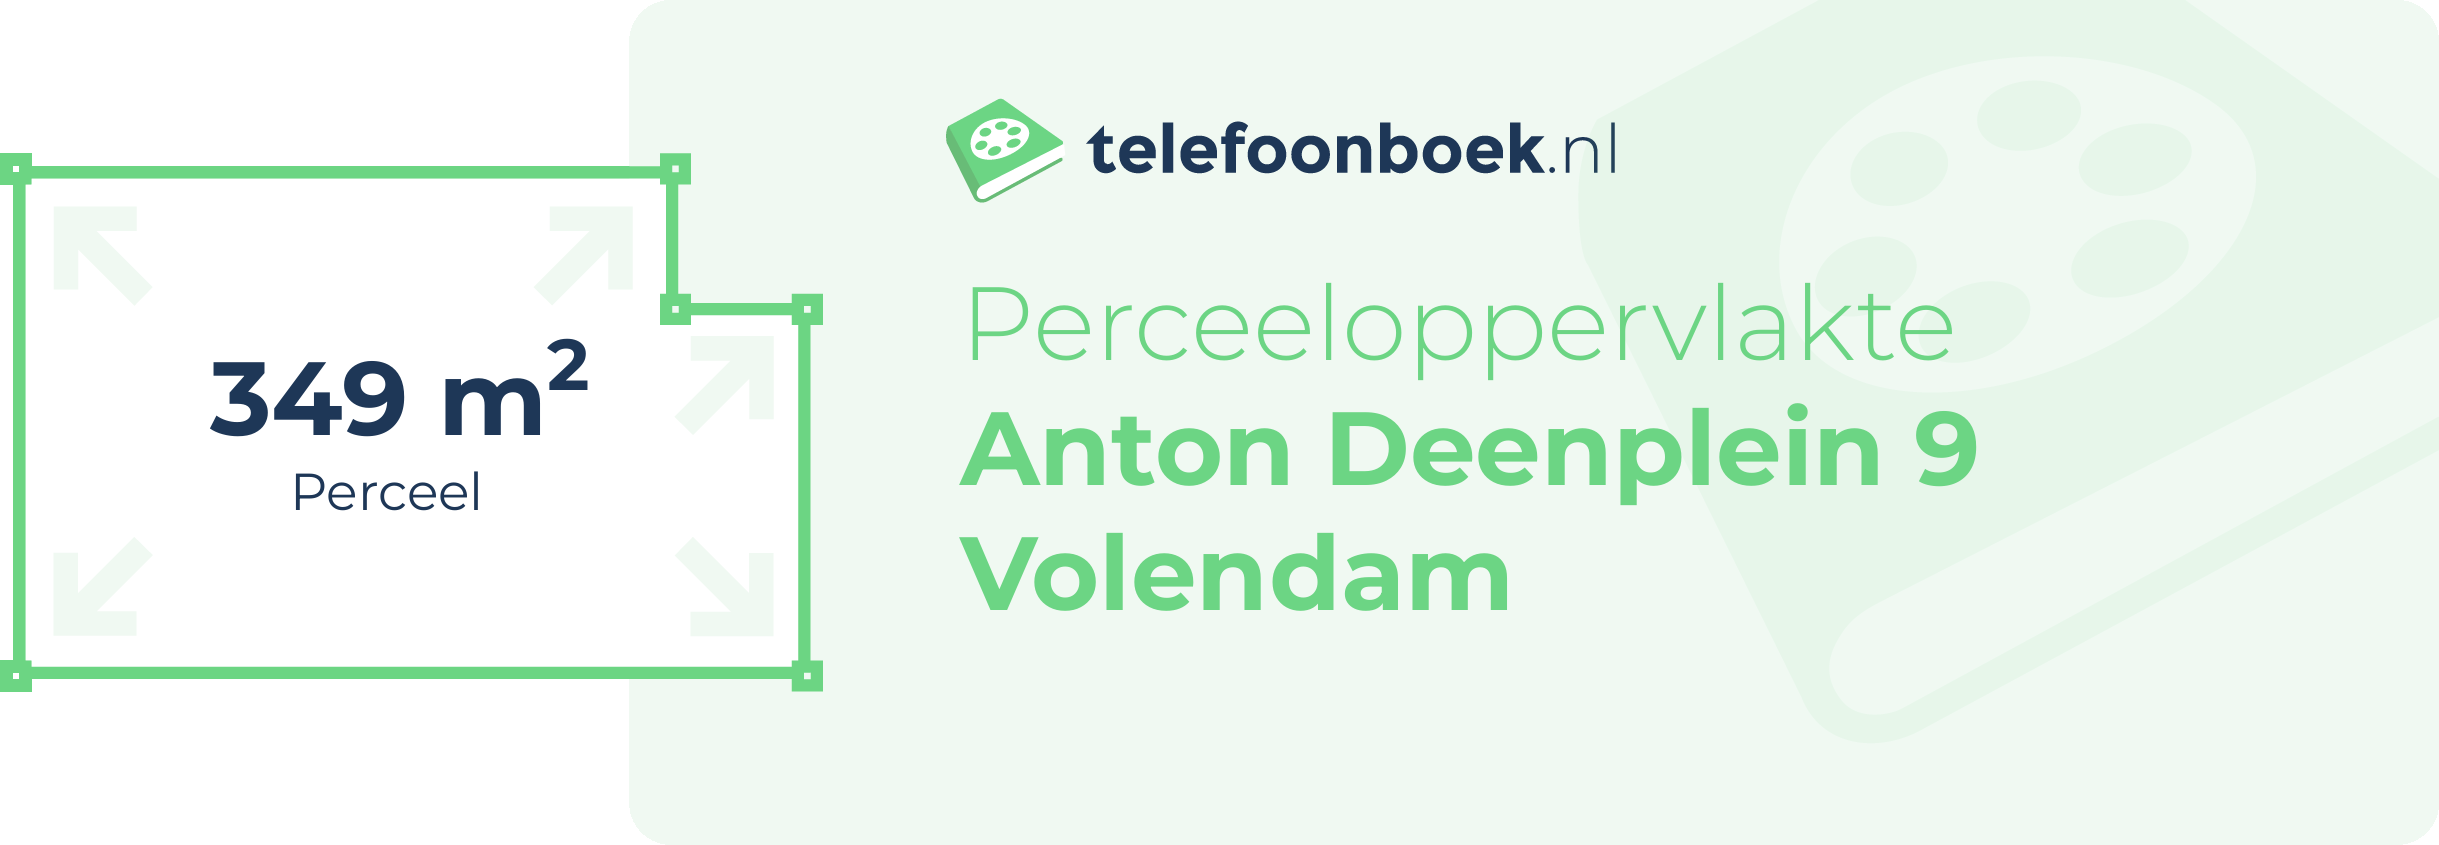 Perceeloppervlakte Anton Deenplein 9 Volendam